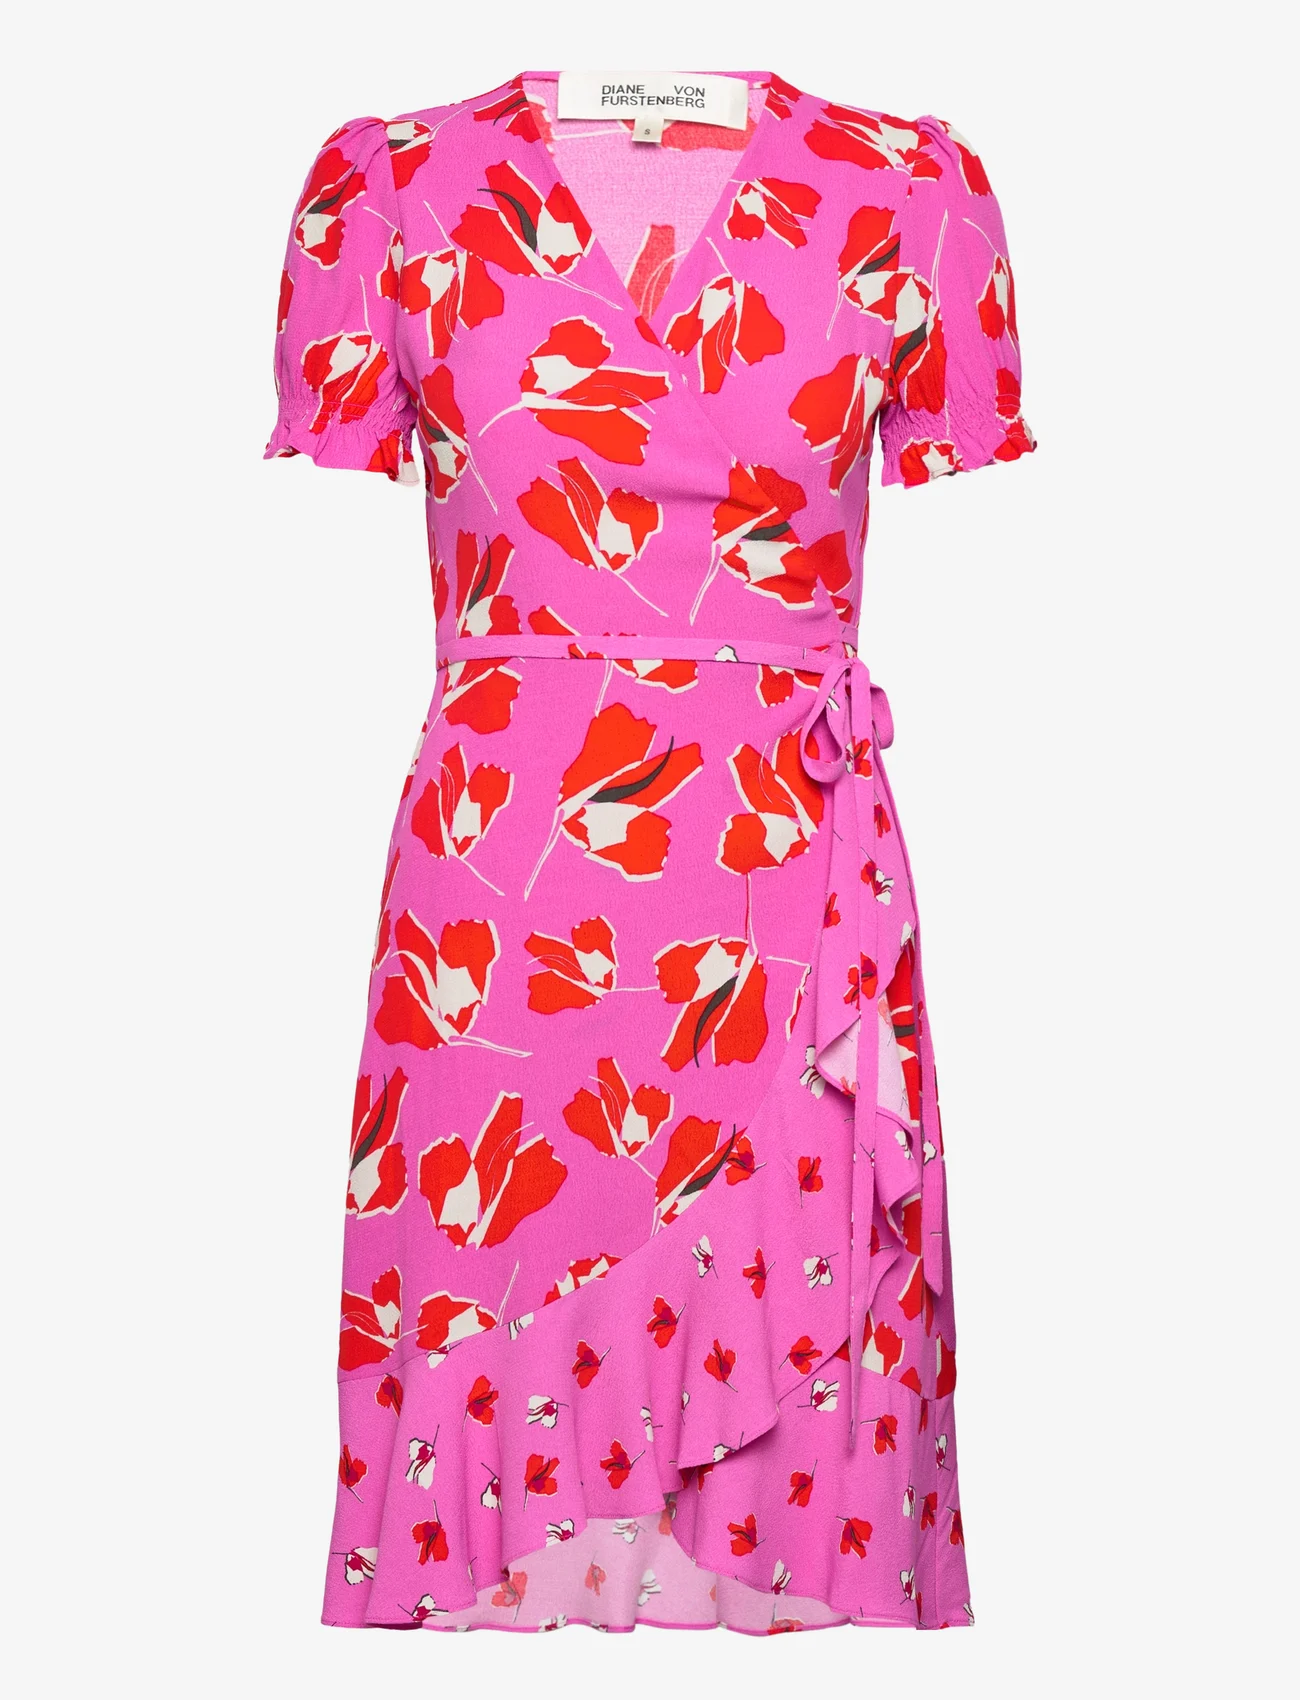 Diane von Furstenberg - DVF EMILIA  MINI DRESS - summer dresses - paper tulip lg pk me/sm pk me - 0